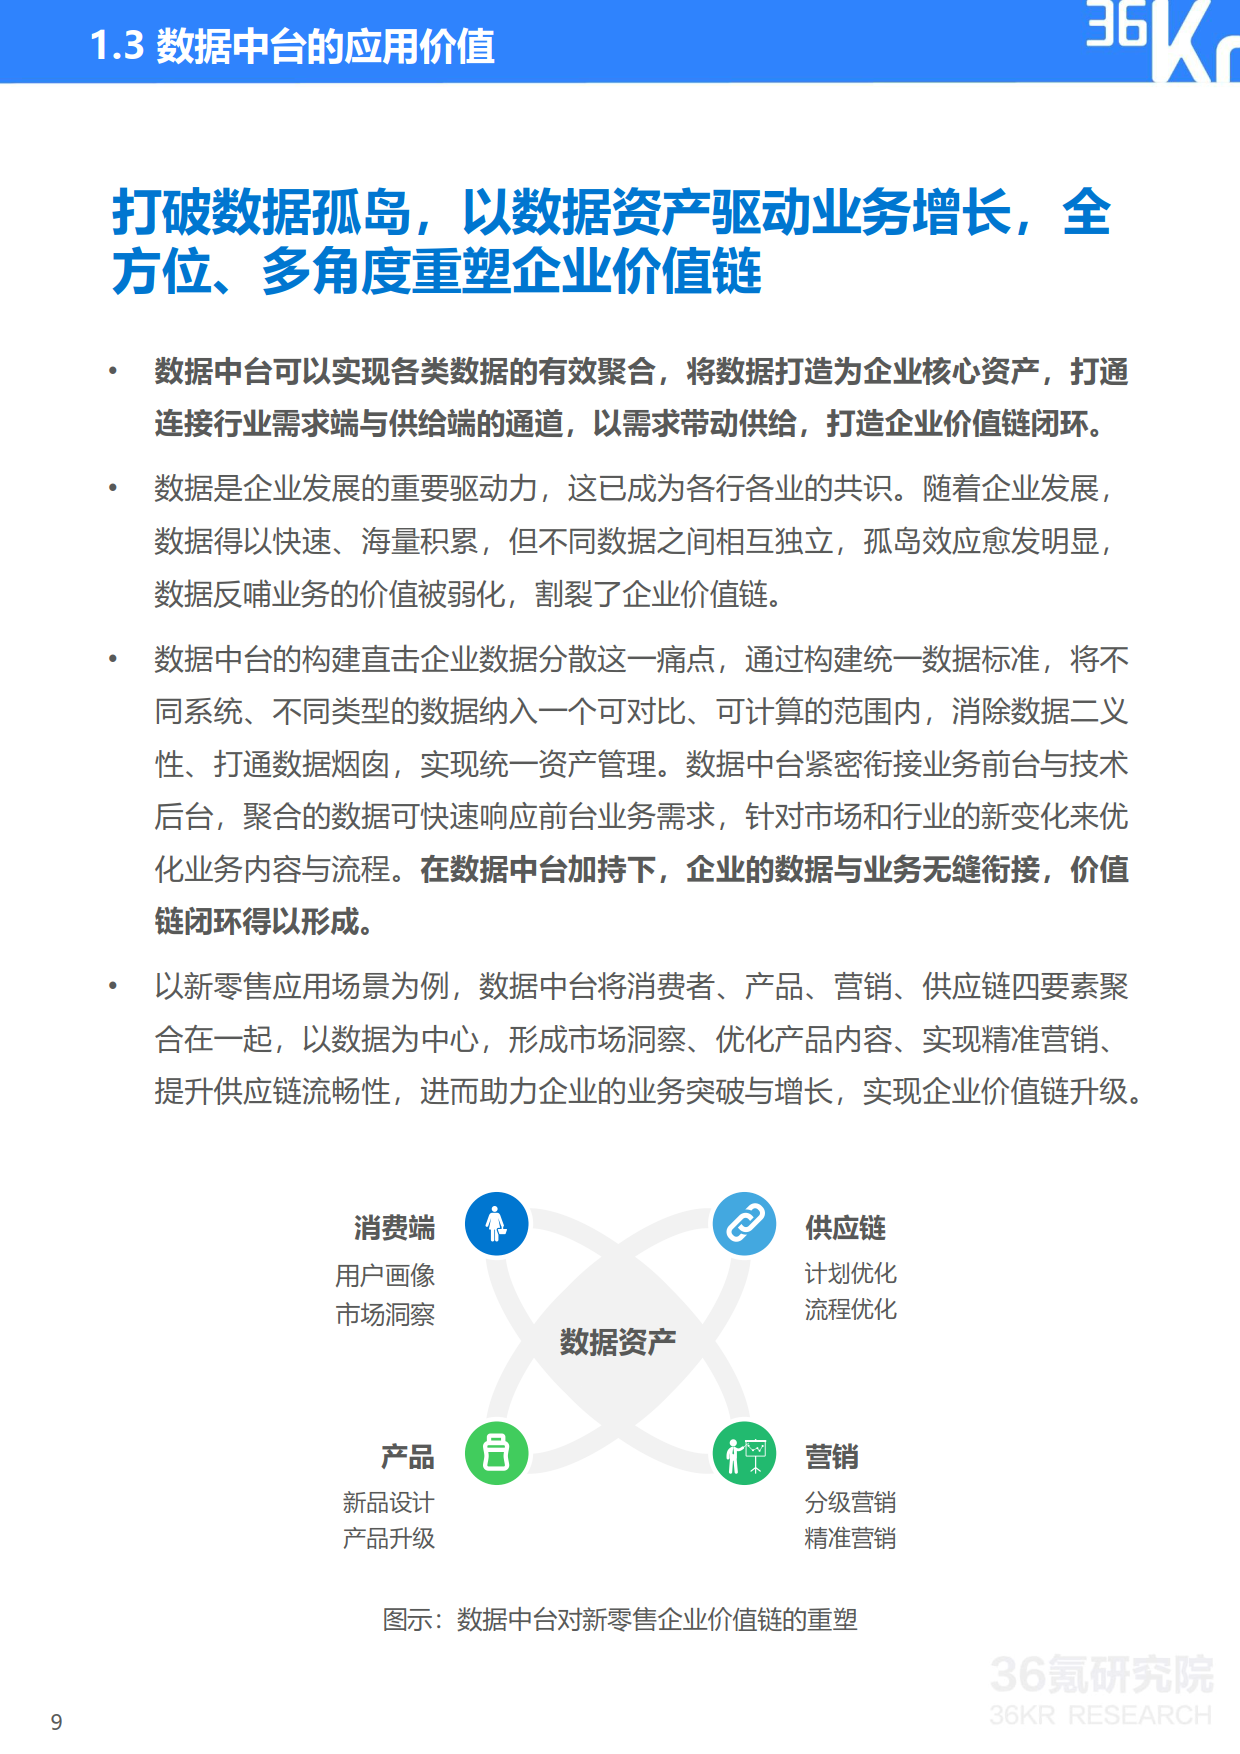 【final】36Kr-2020年中国服装行业数据中台研究报告_10.png